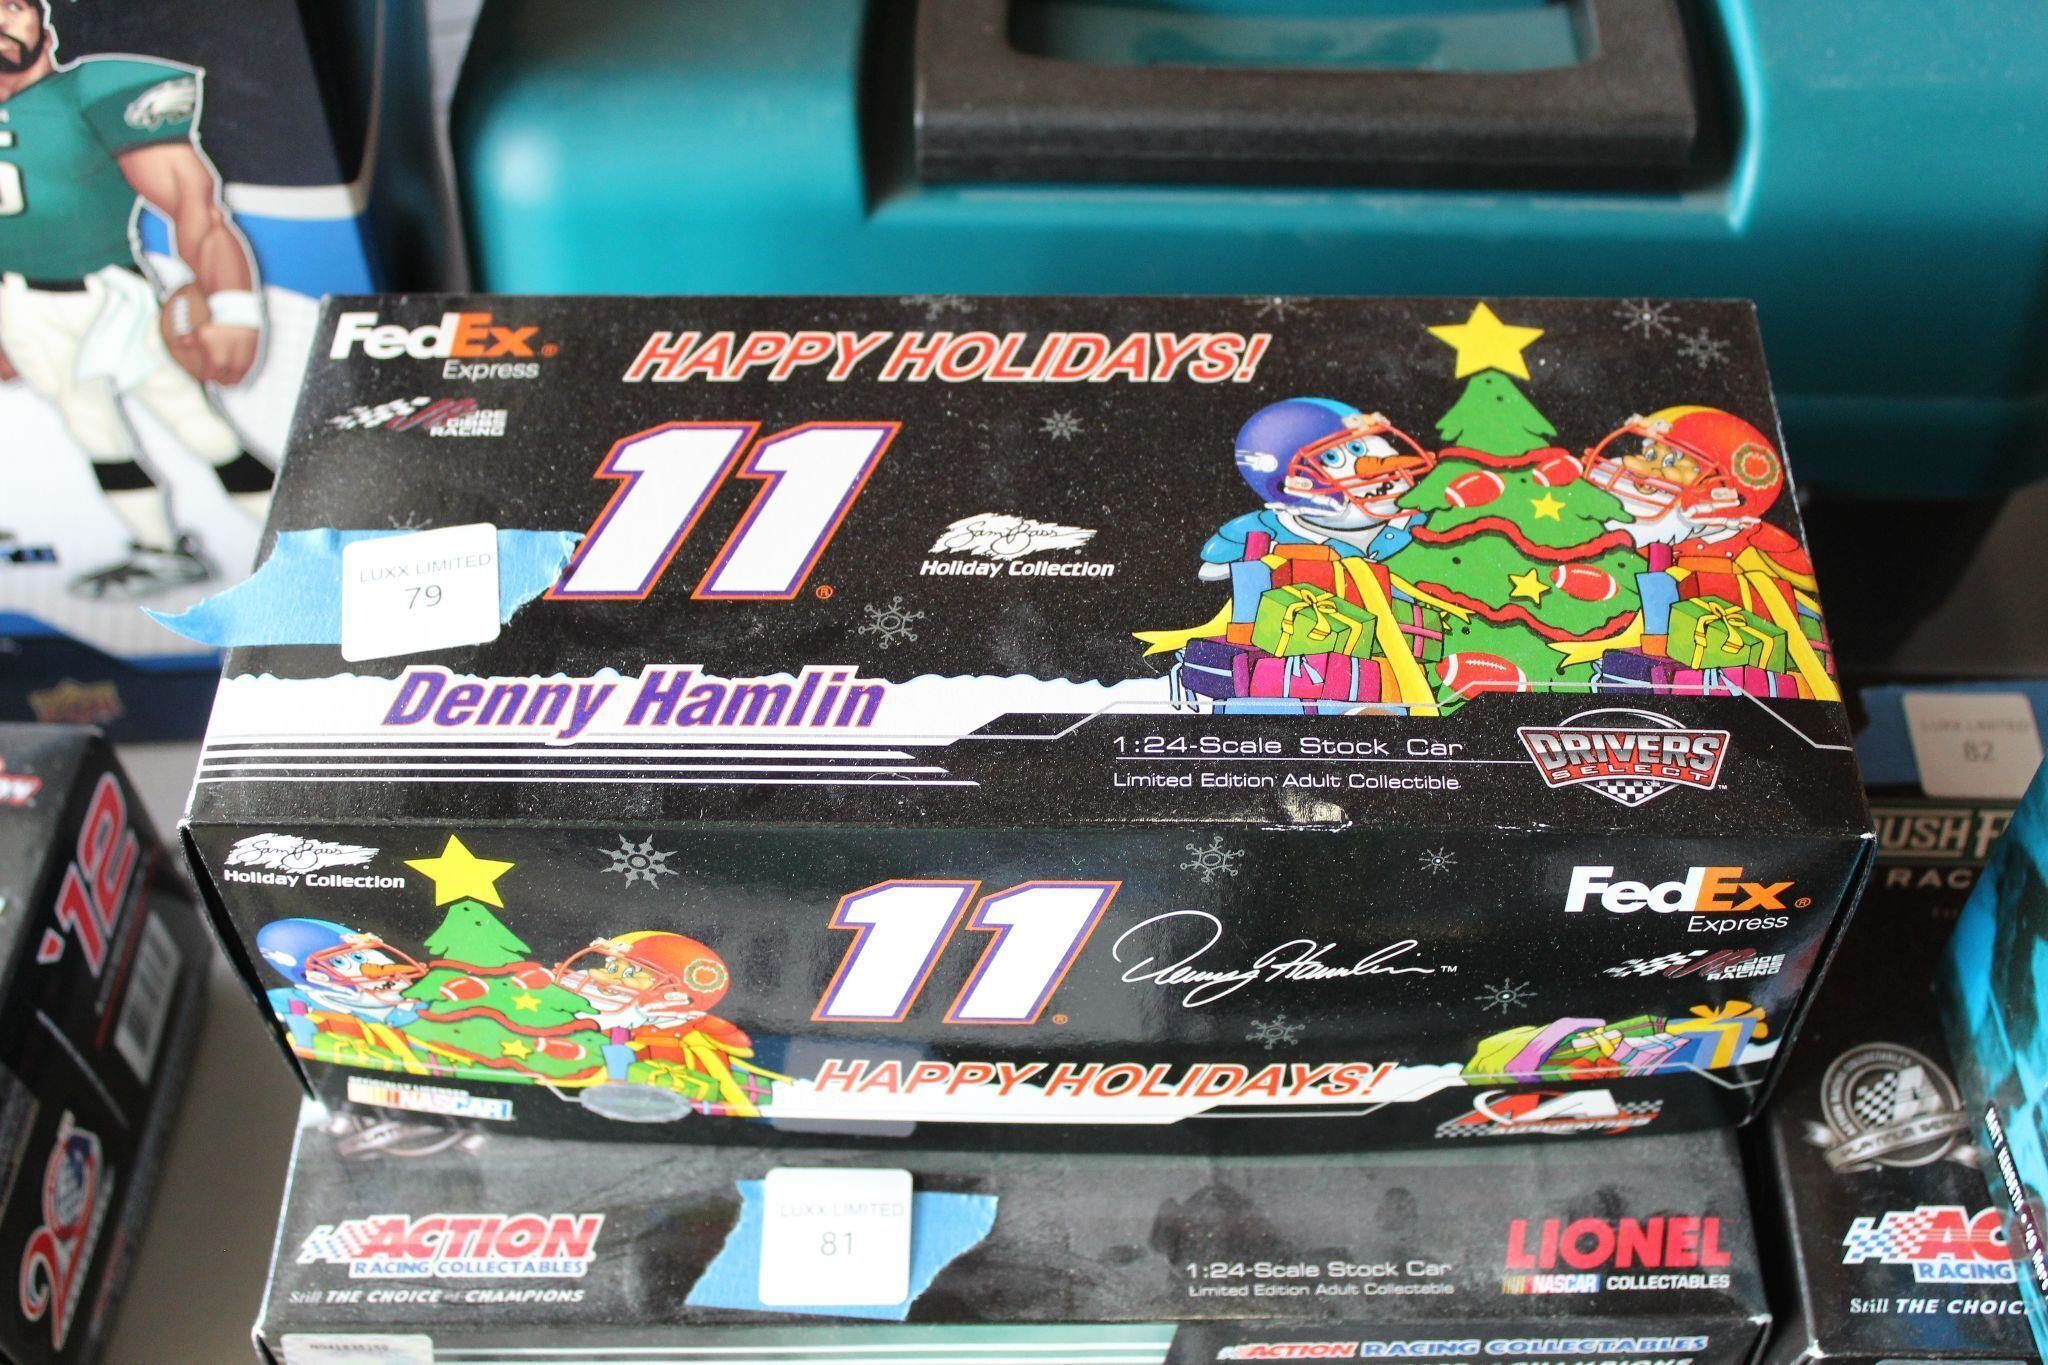 Denny Hamlin 1:24 scale stock car